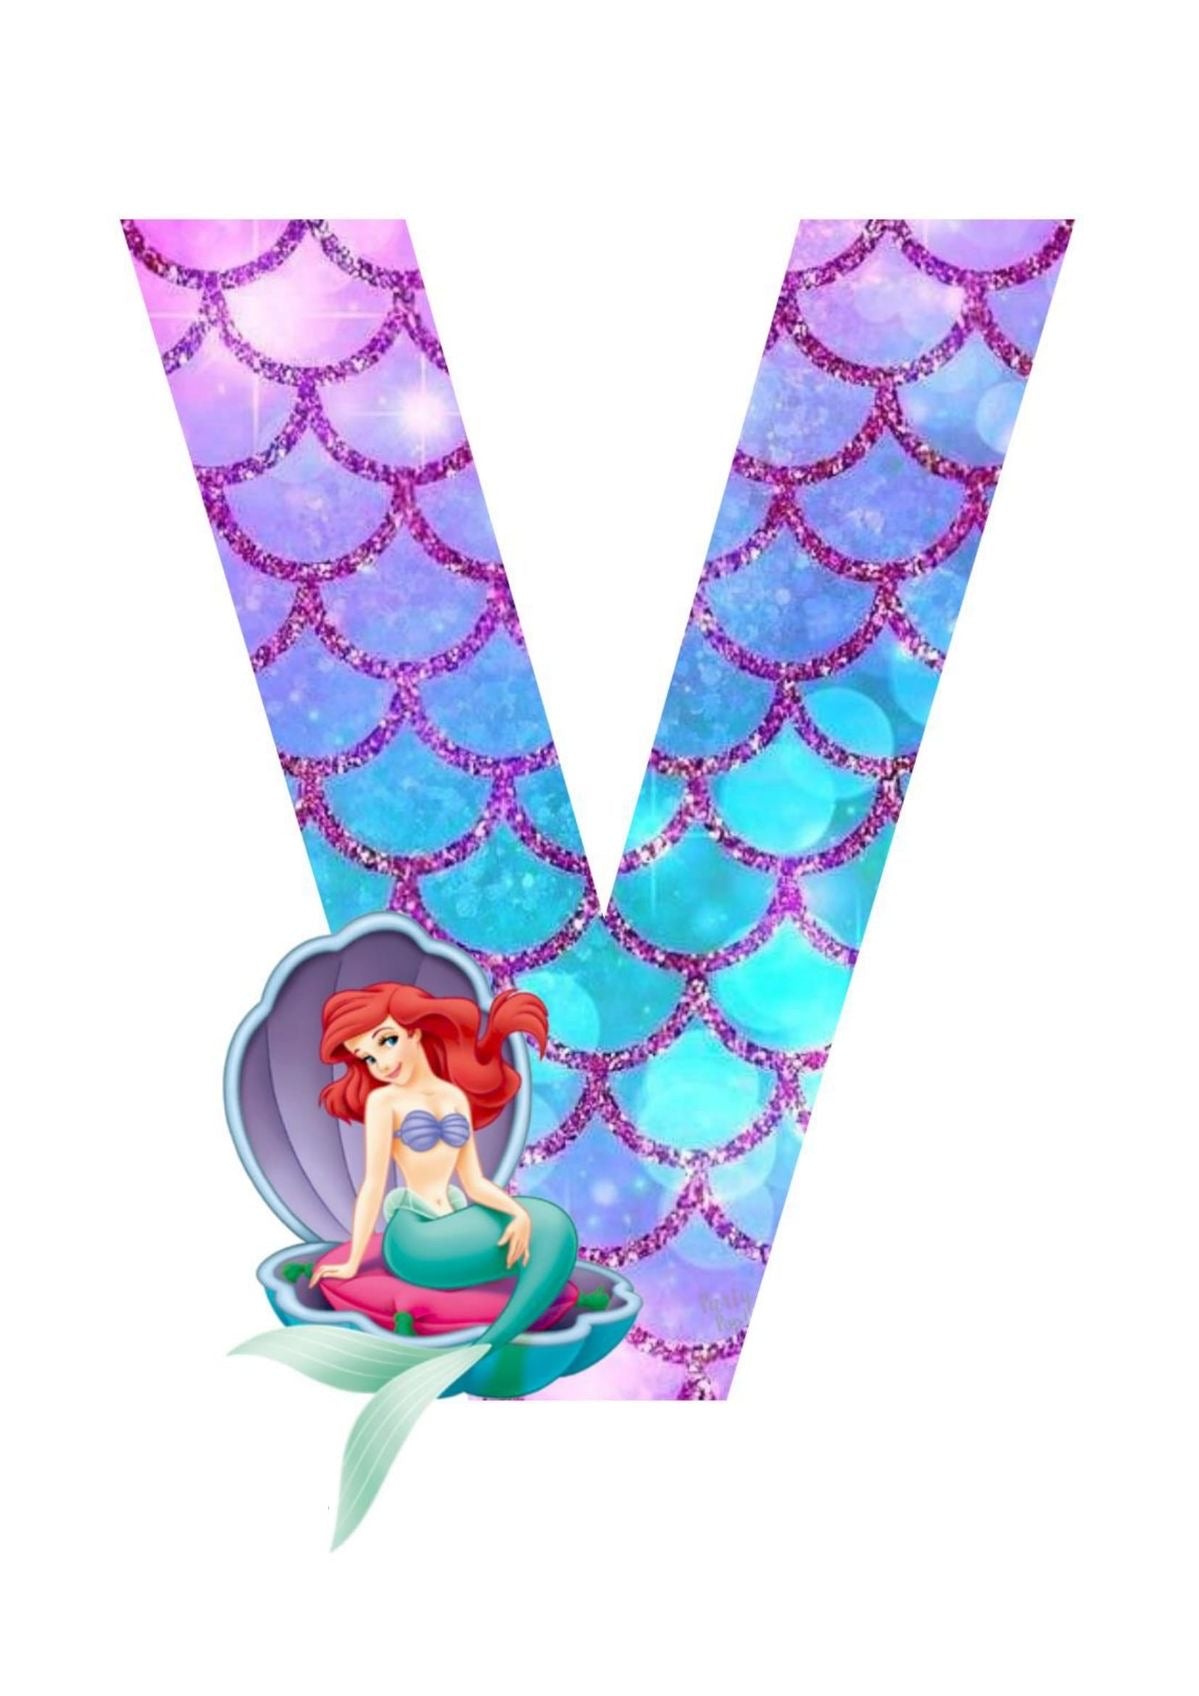 Kids Personalised Mermaid PJs - Plain Pink - Birthday, Initials, Name, Ages 6 Months - 10 Years